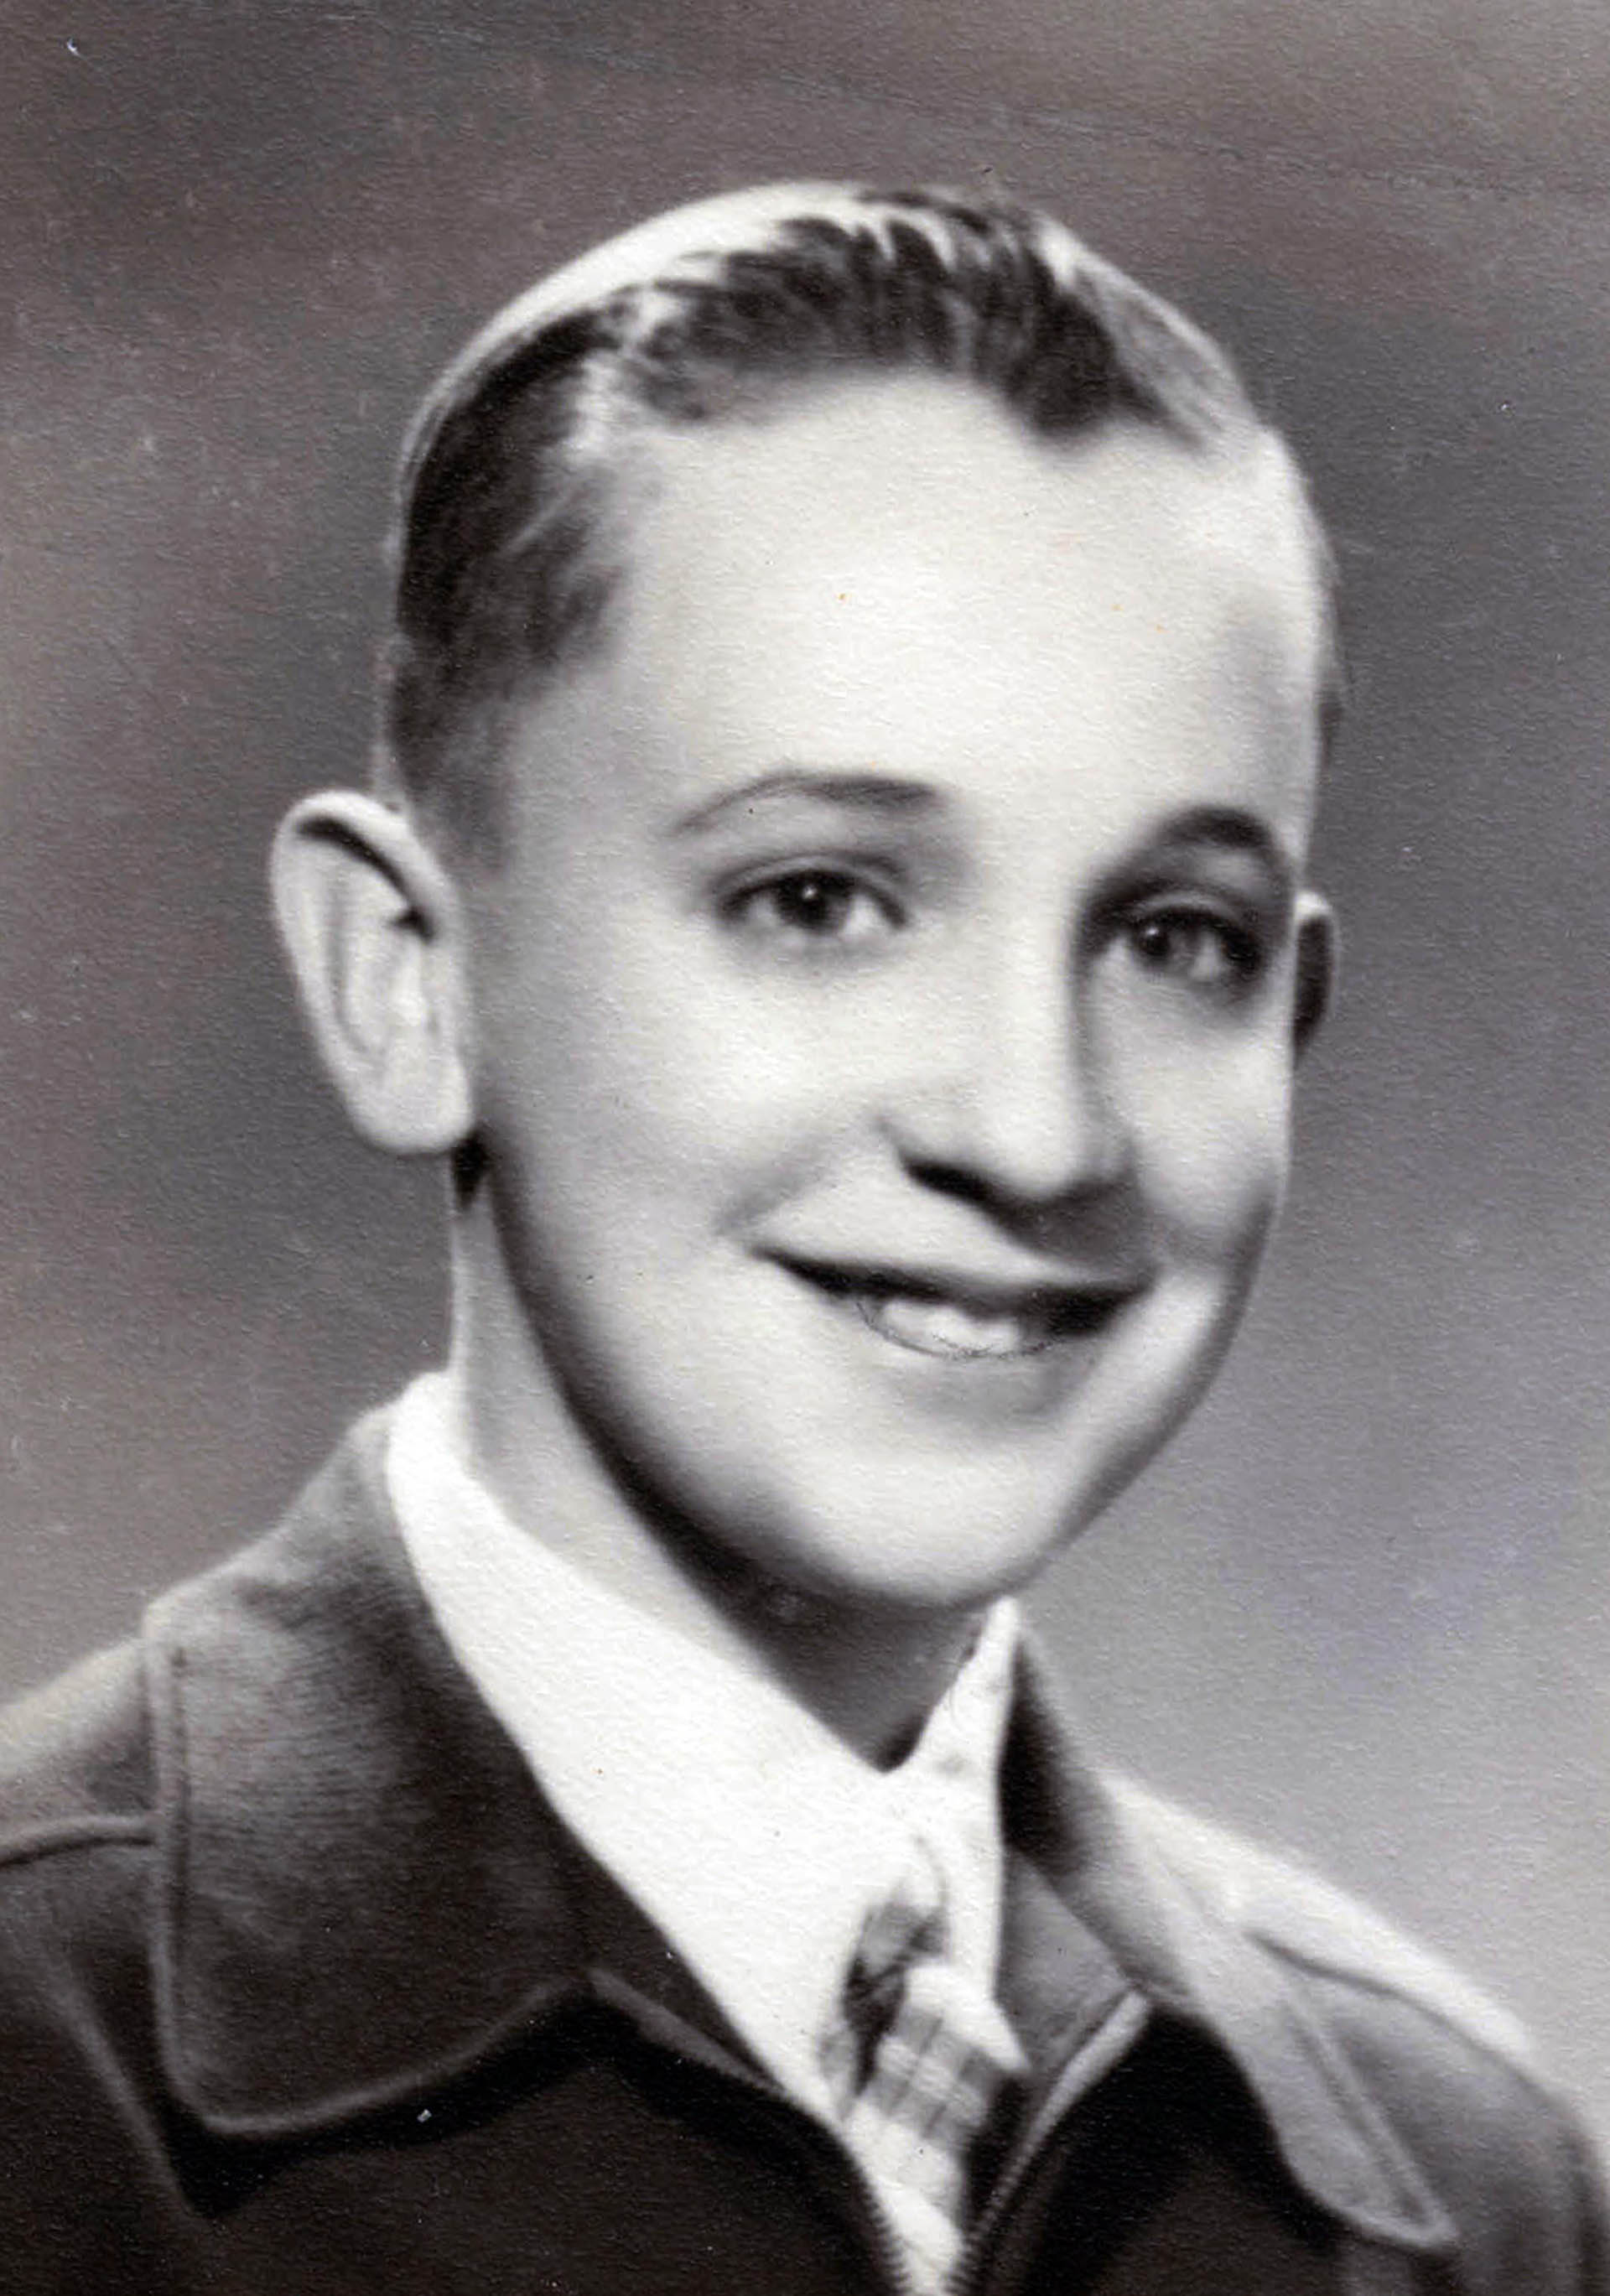  Jorge Mario Bergoglio en su juventud